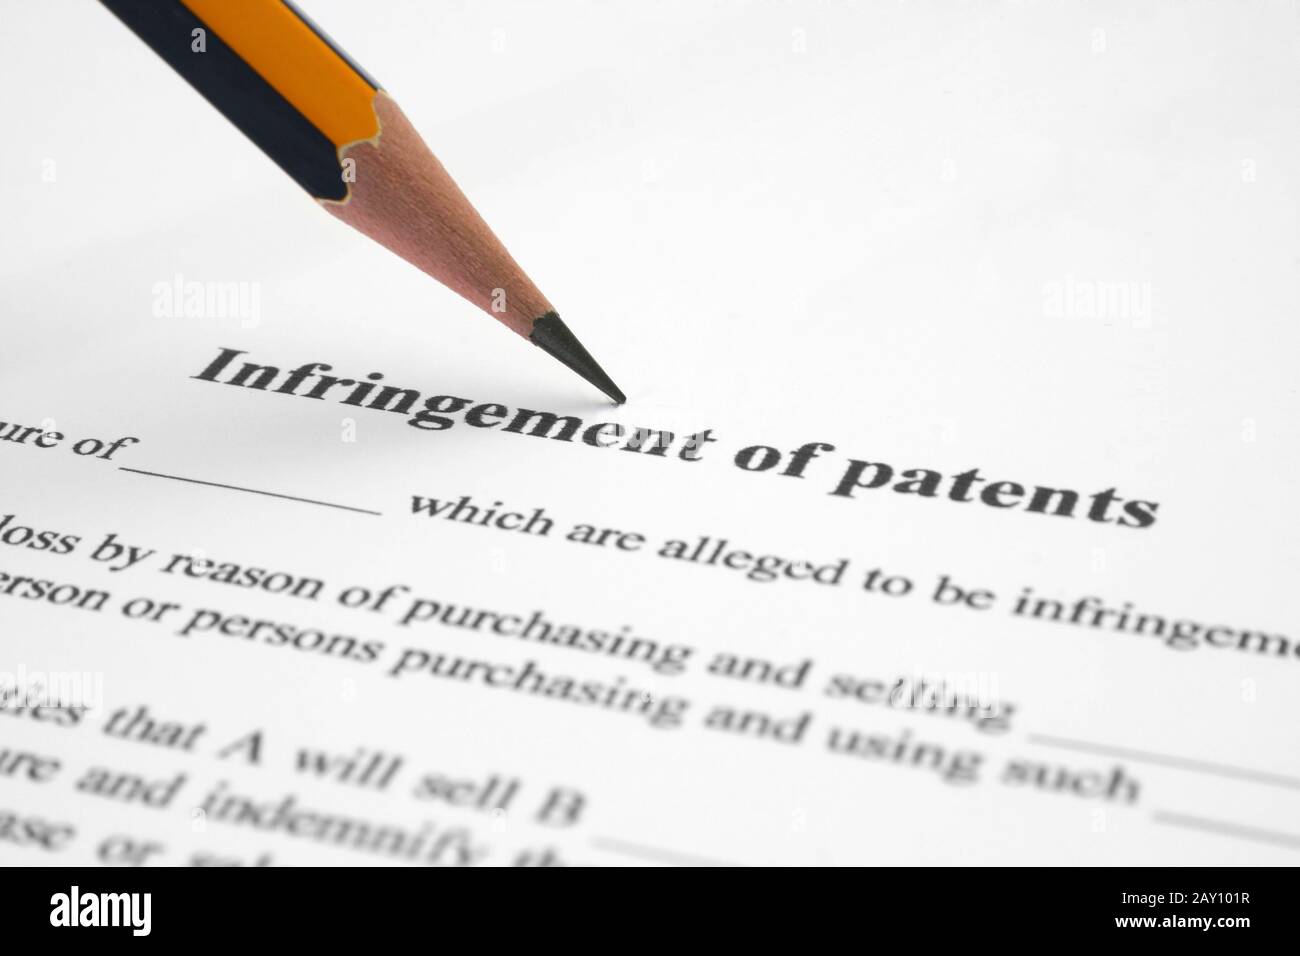 Infrigement of patents Stock Photo